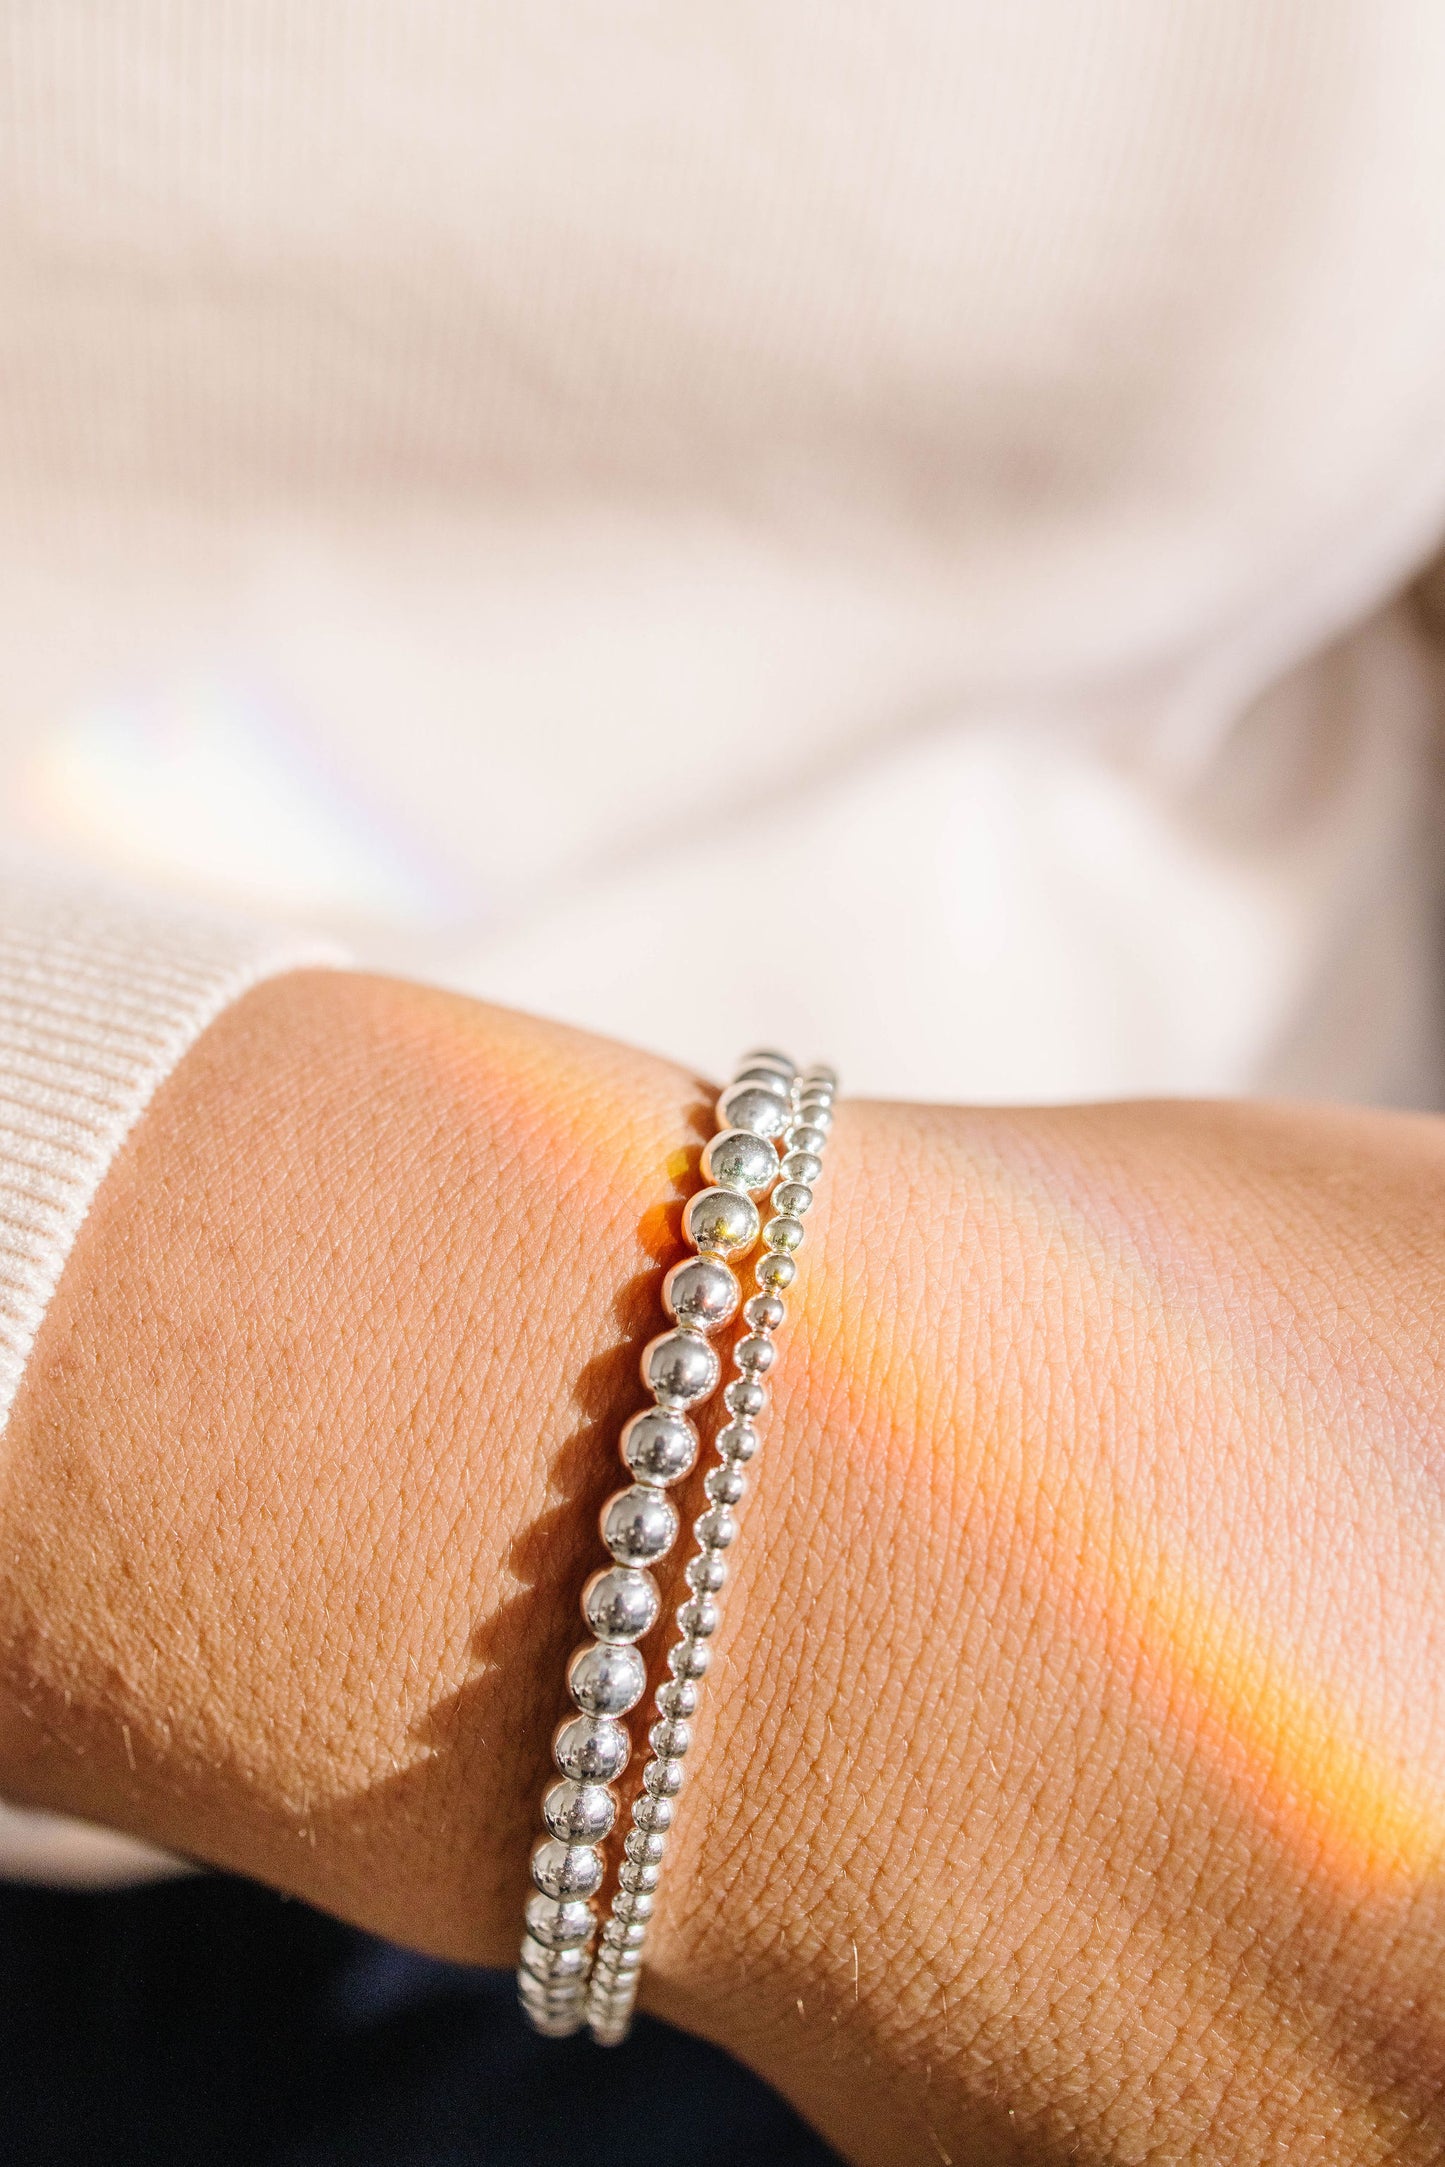 Kindness Adult Bracelet (5MM beads)